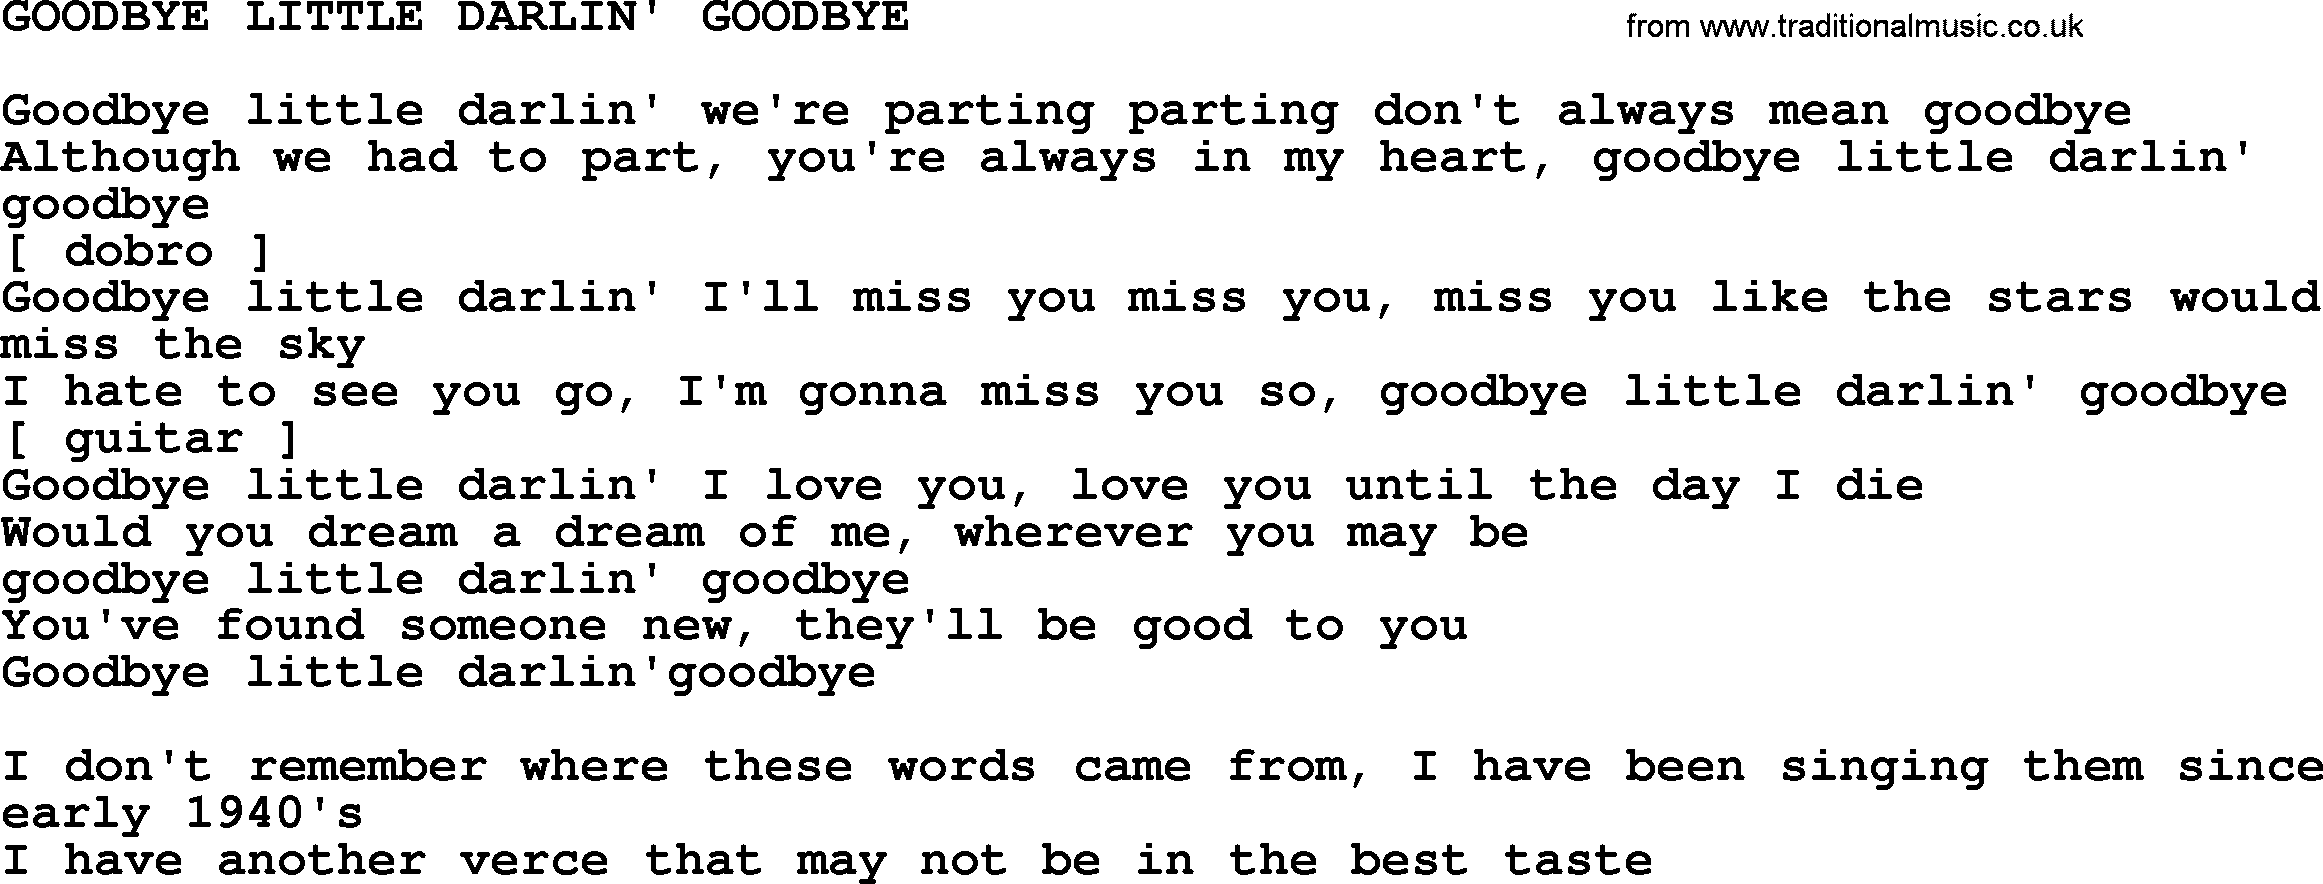 Johnny Cash song Goodbye Little Darlin' Goodbye.txt lyrics